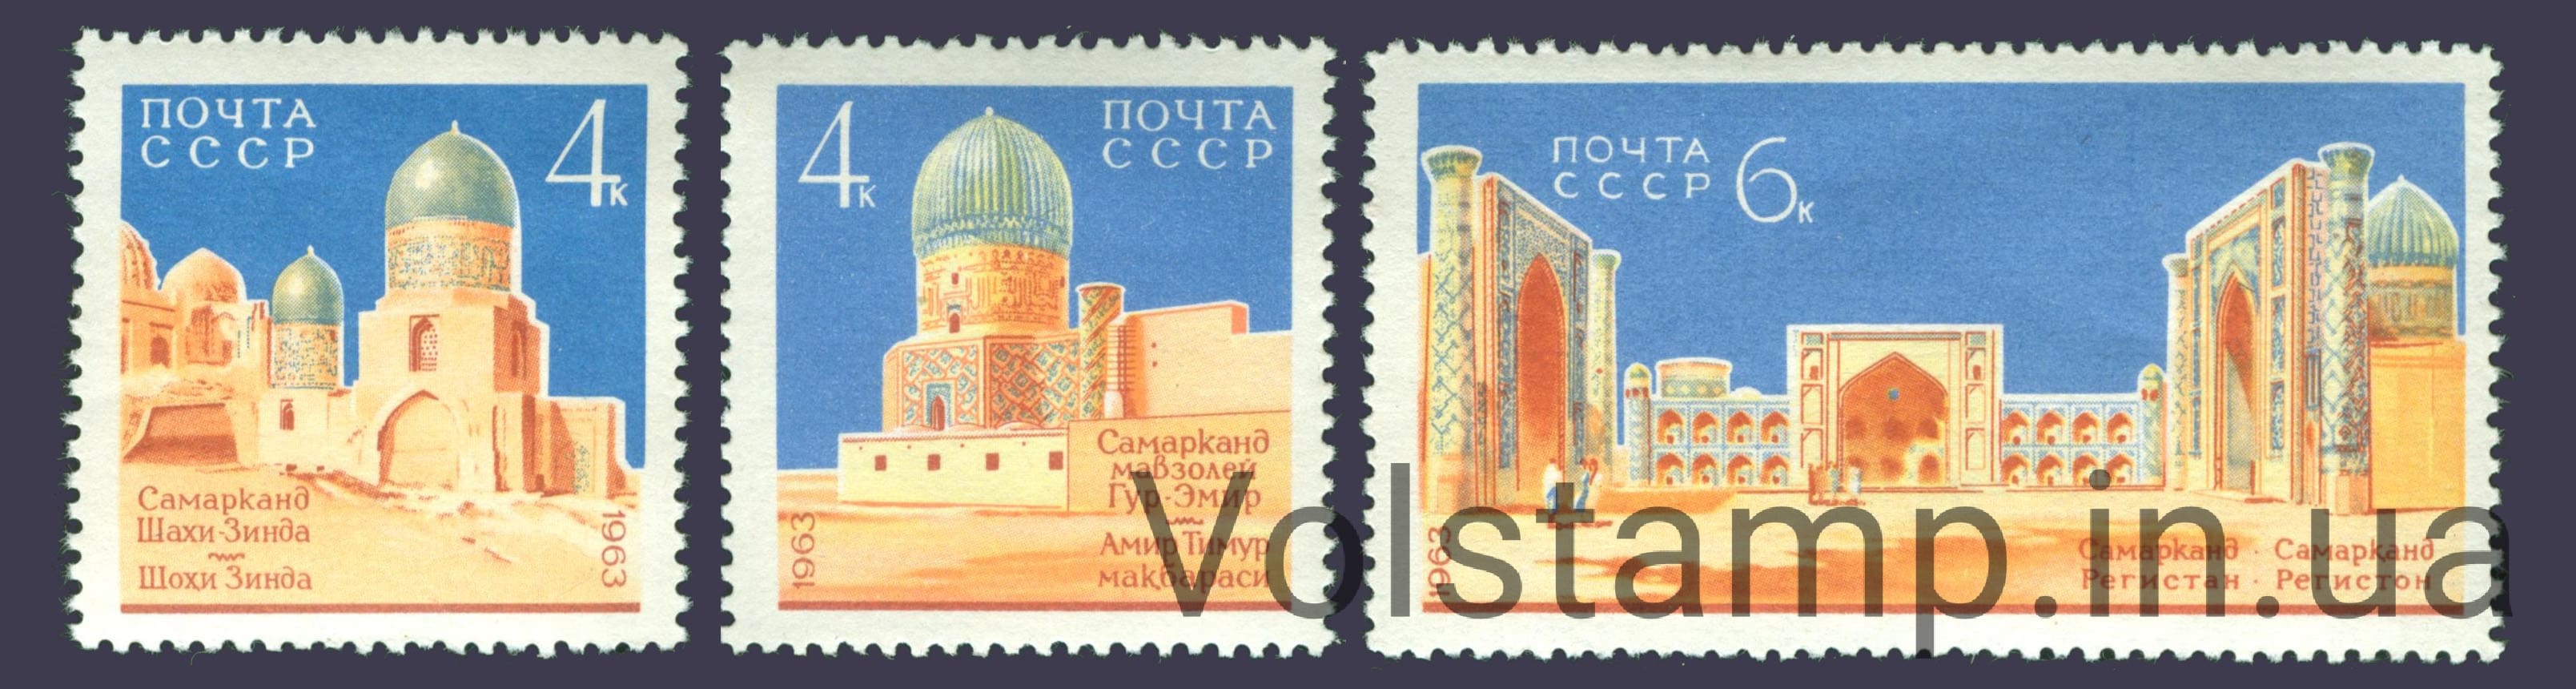 1963 серия марок Архитектурные памятники Самарканда №2846-2848